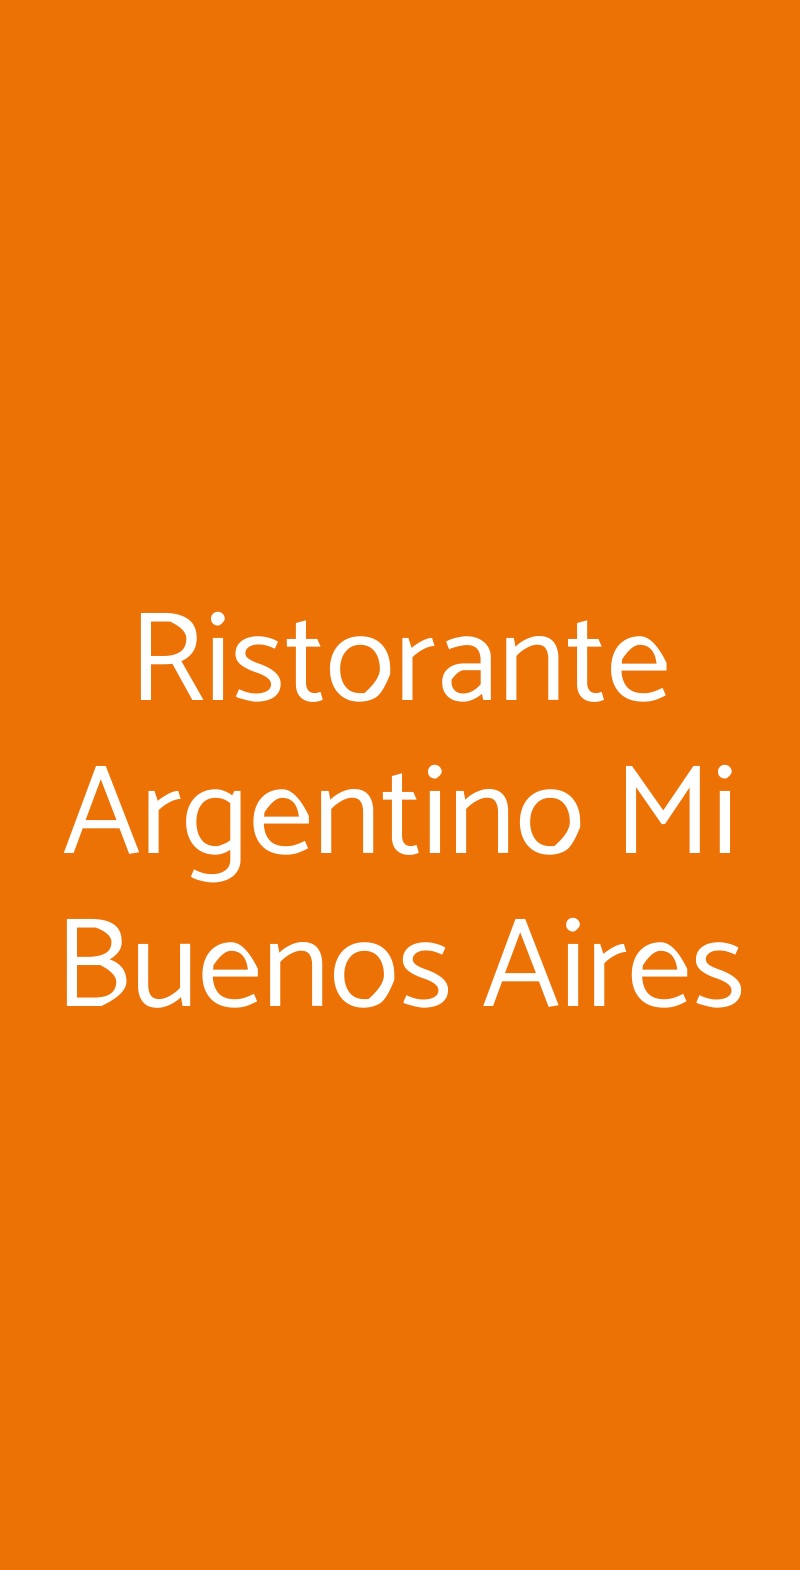 Ristorante Argentino Mi Buenos Aires Biella menù 1 pagina